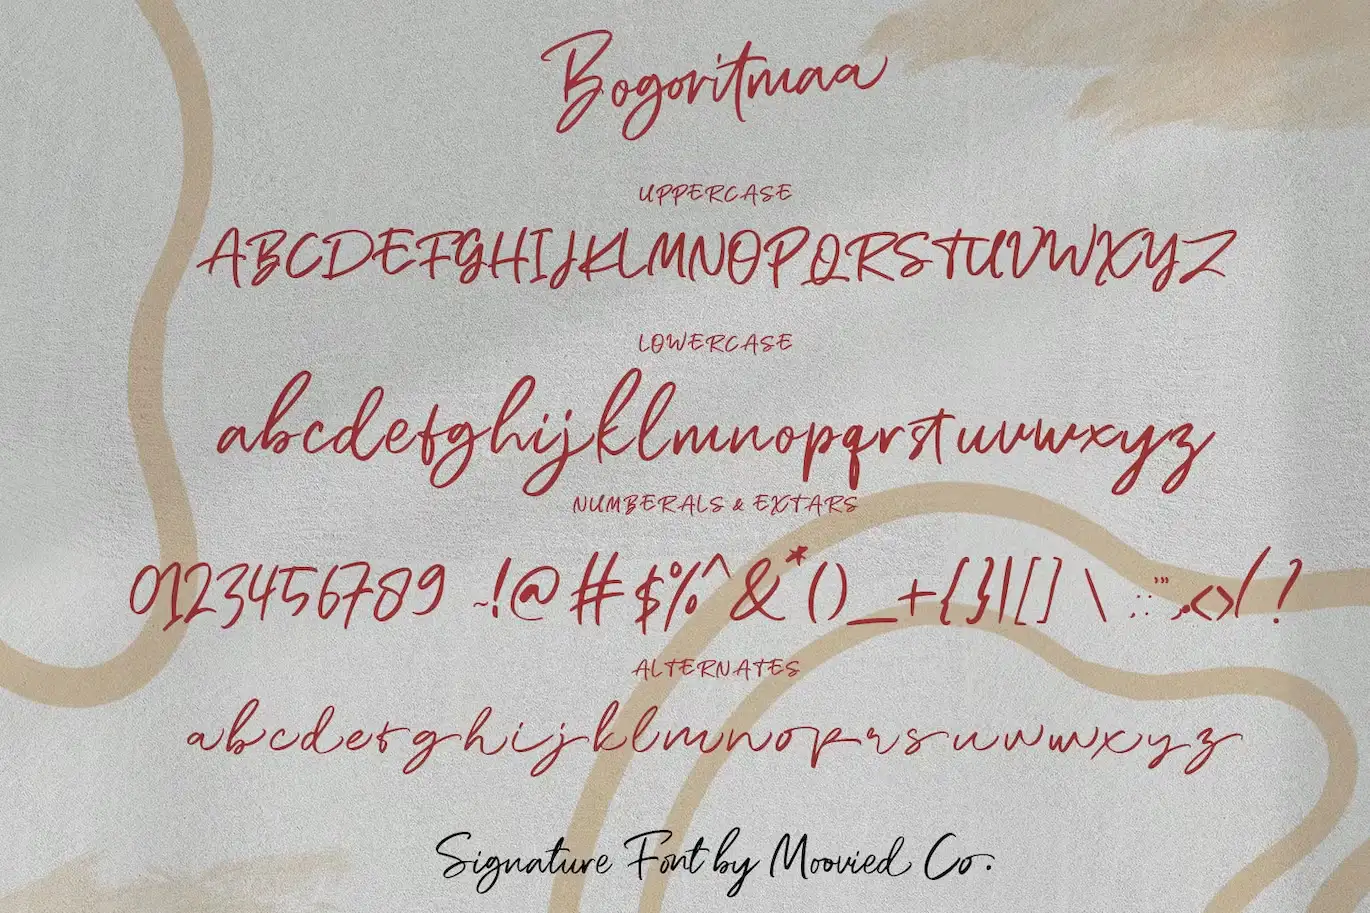 فونت انگلیسی به سبک امضا Bogoritmaa Signature - 2